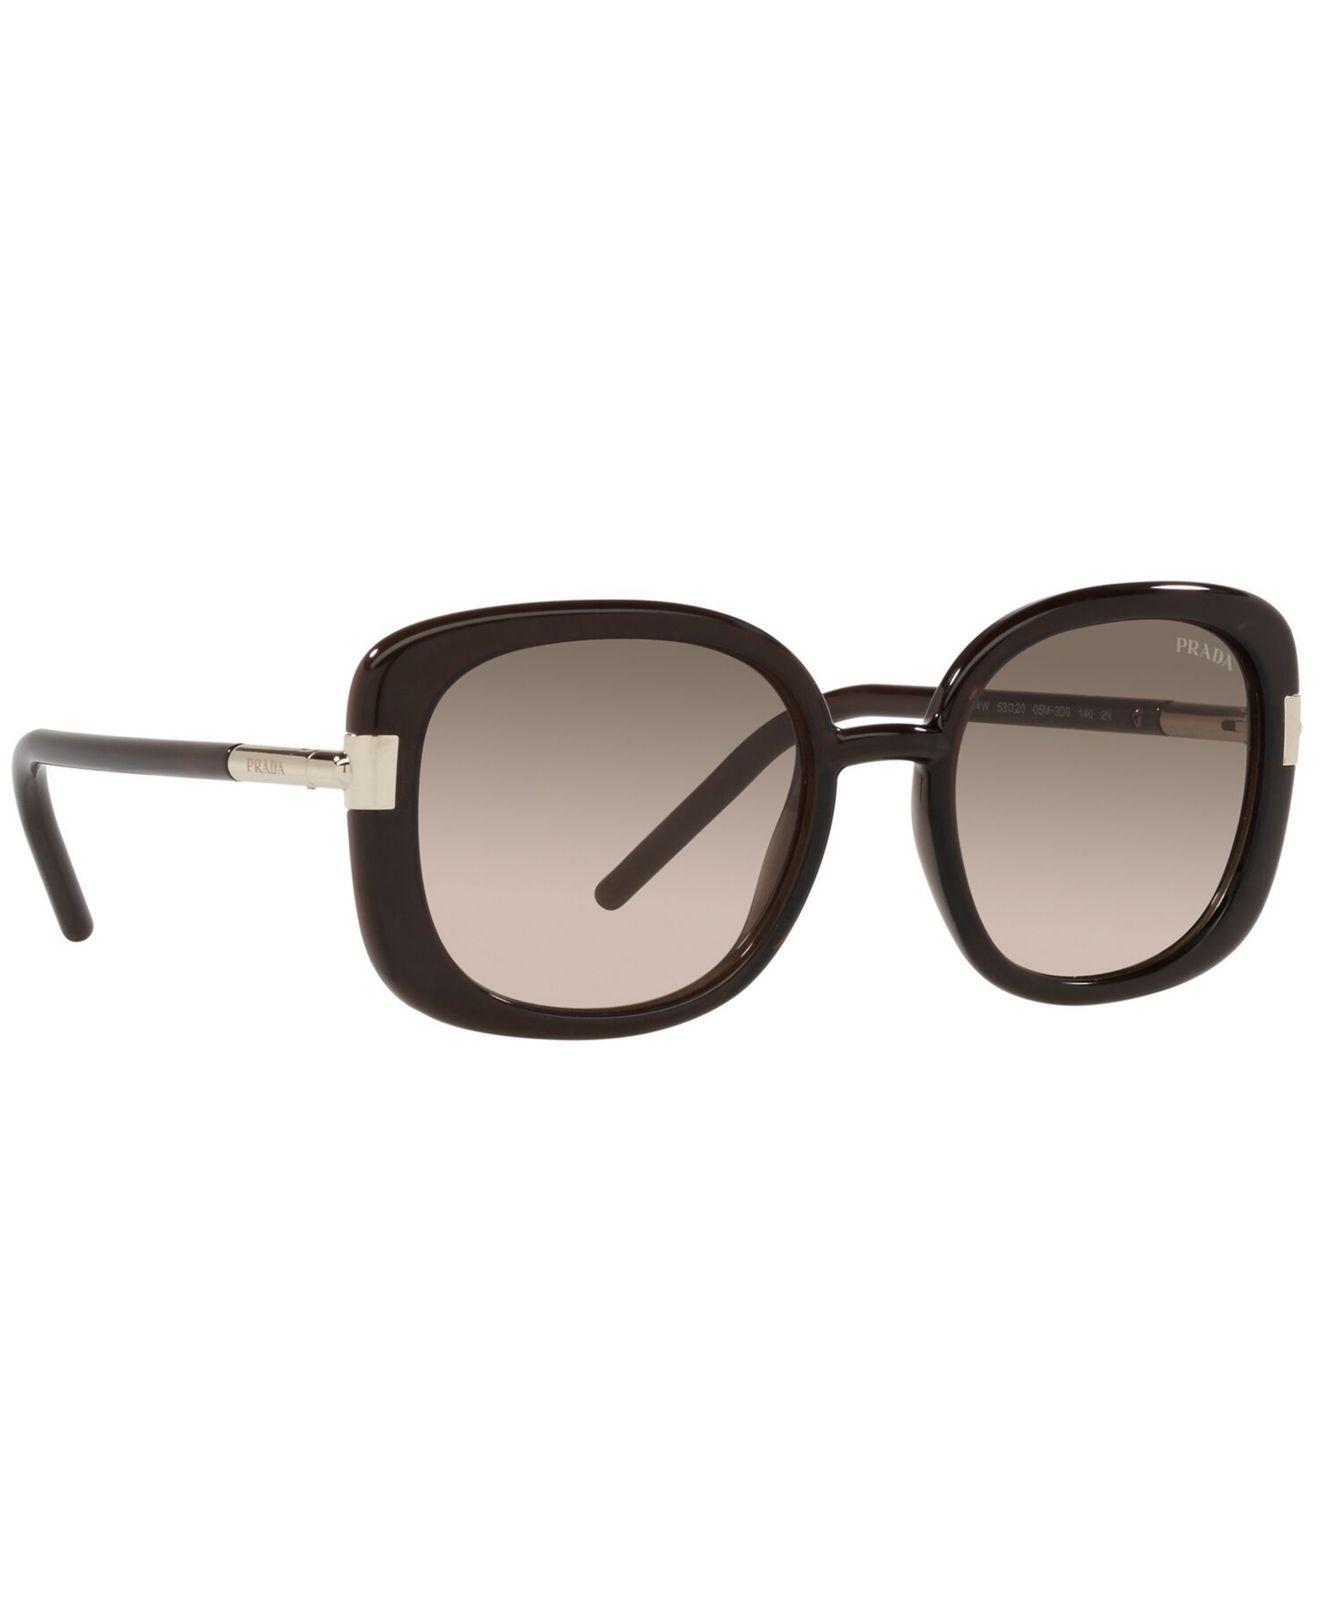 Prada Sunglasses, Pr 04ws 53 in Brown | Lyst